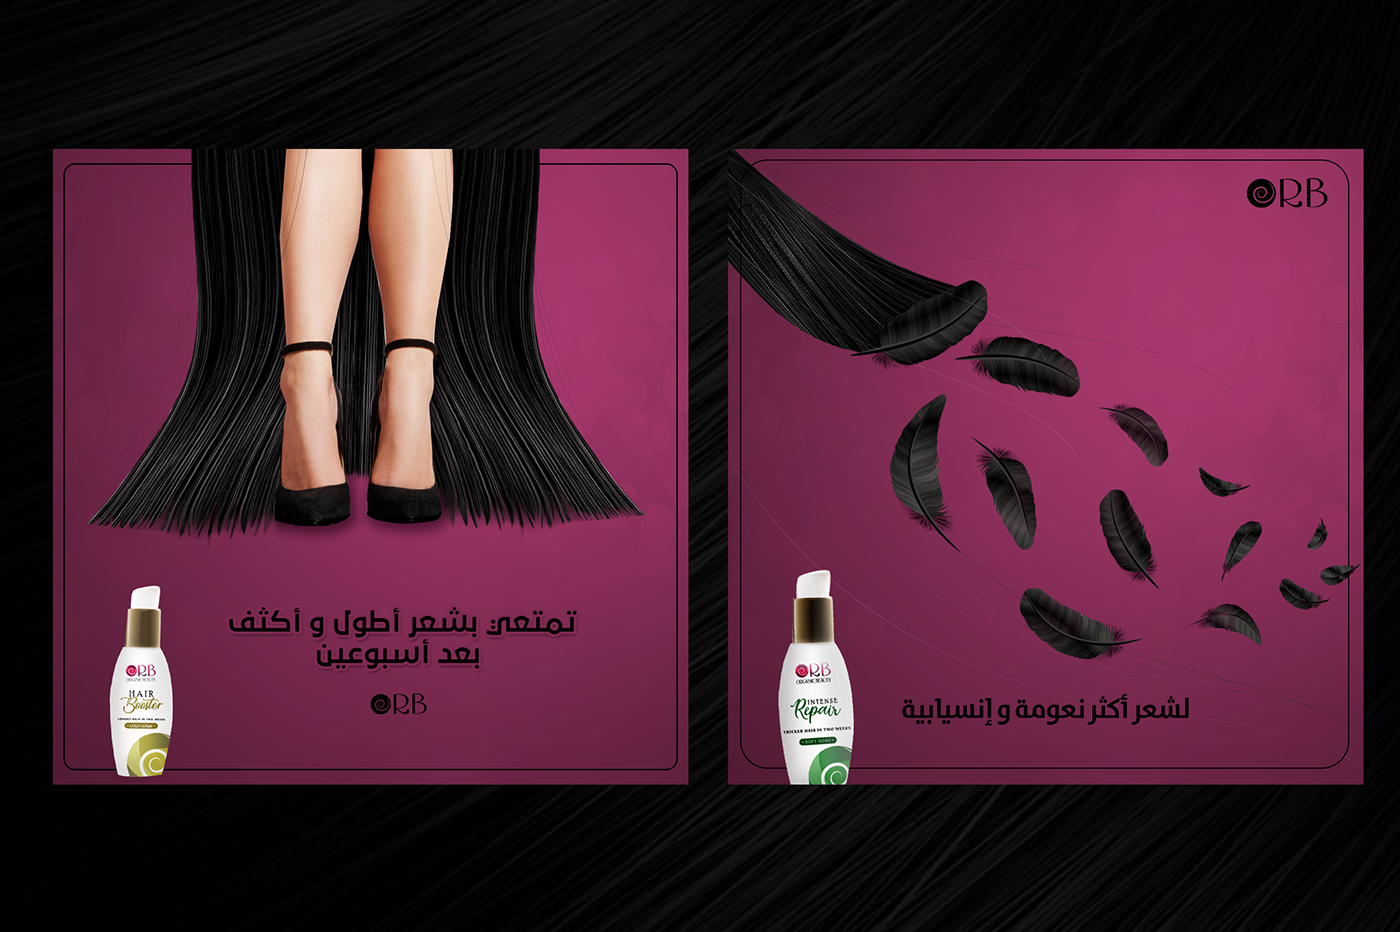 Socialmedia egypt beauty products orb creative Advertising  ad SM marketing  